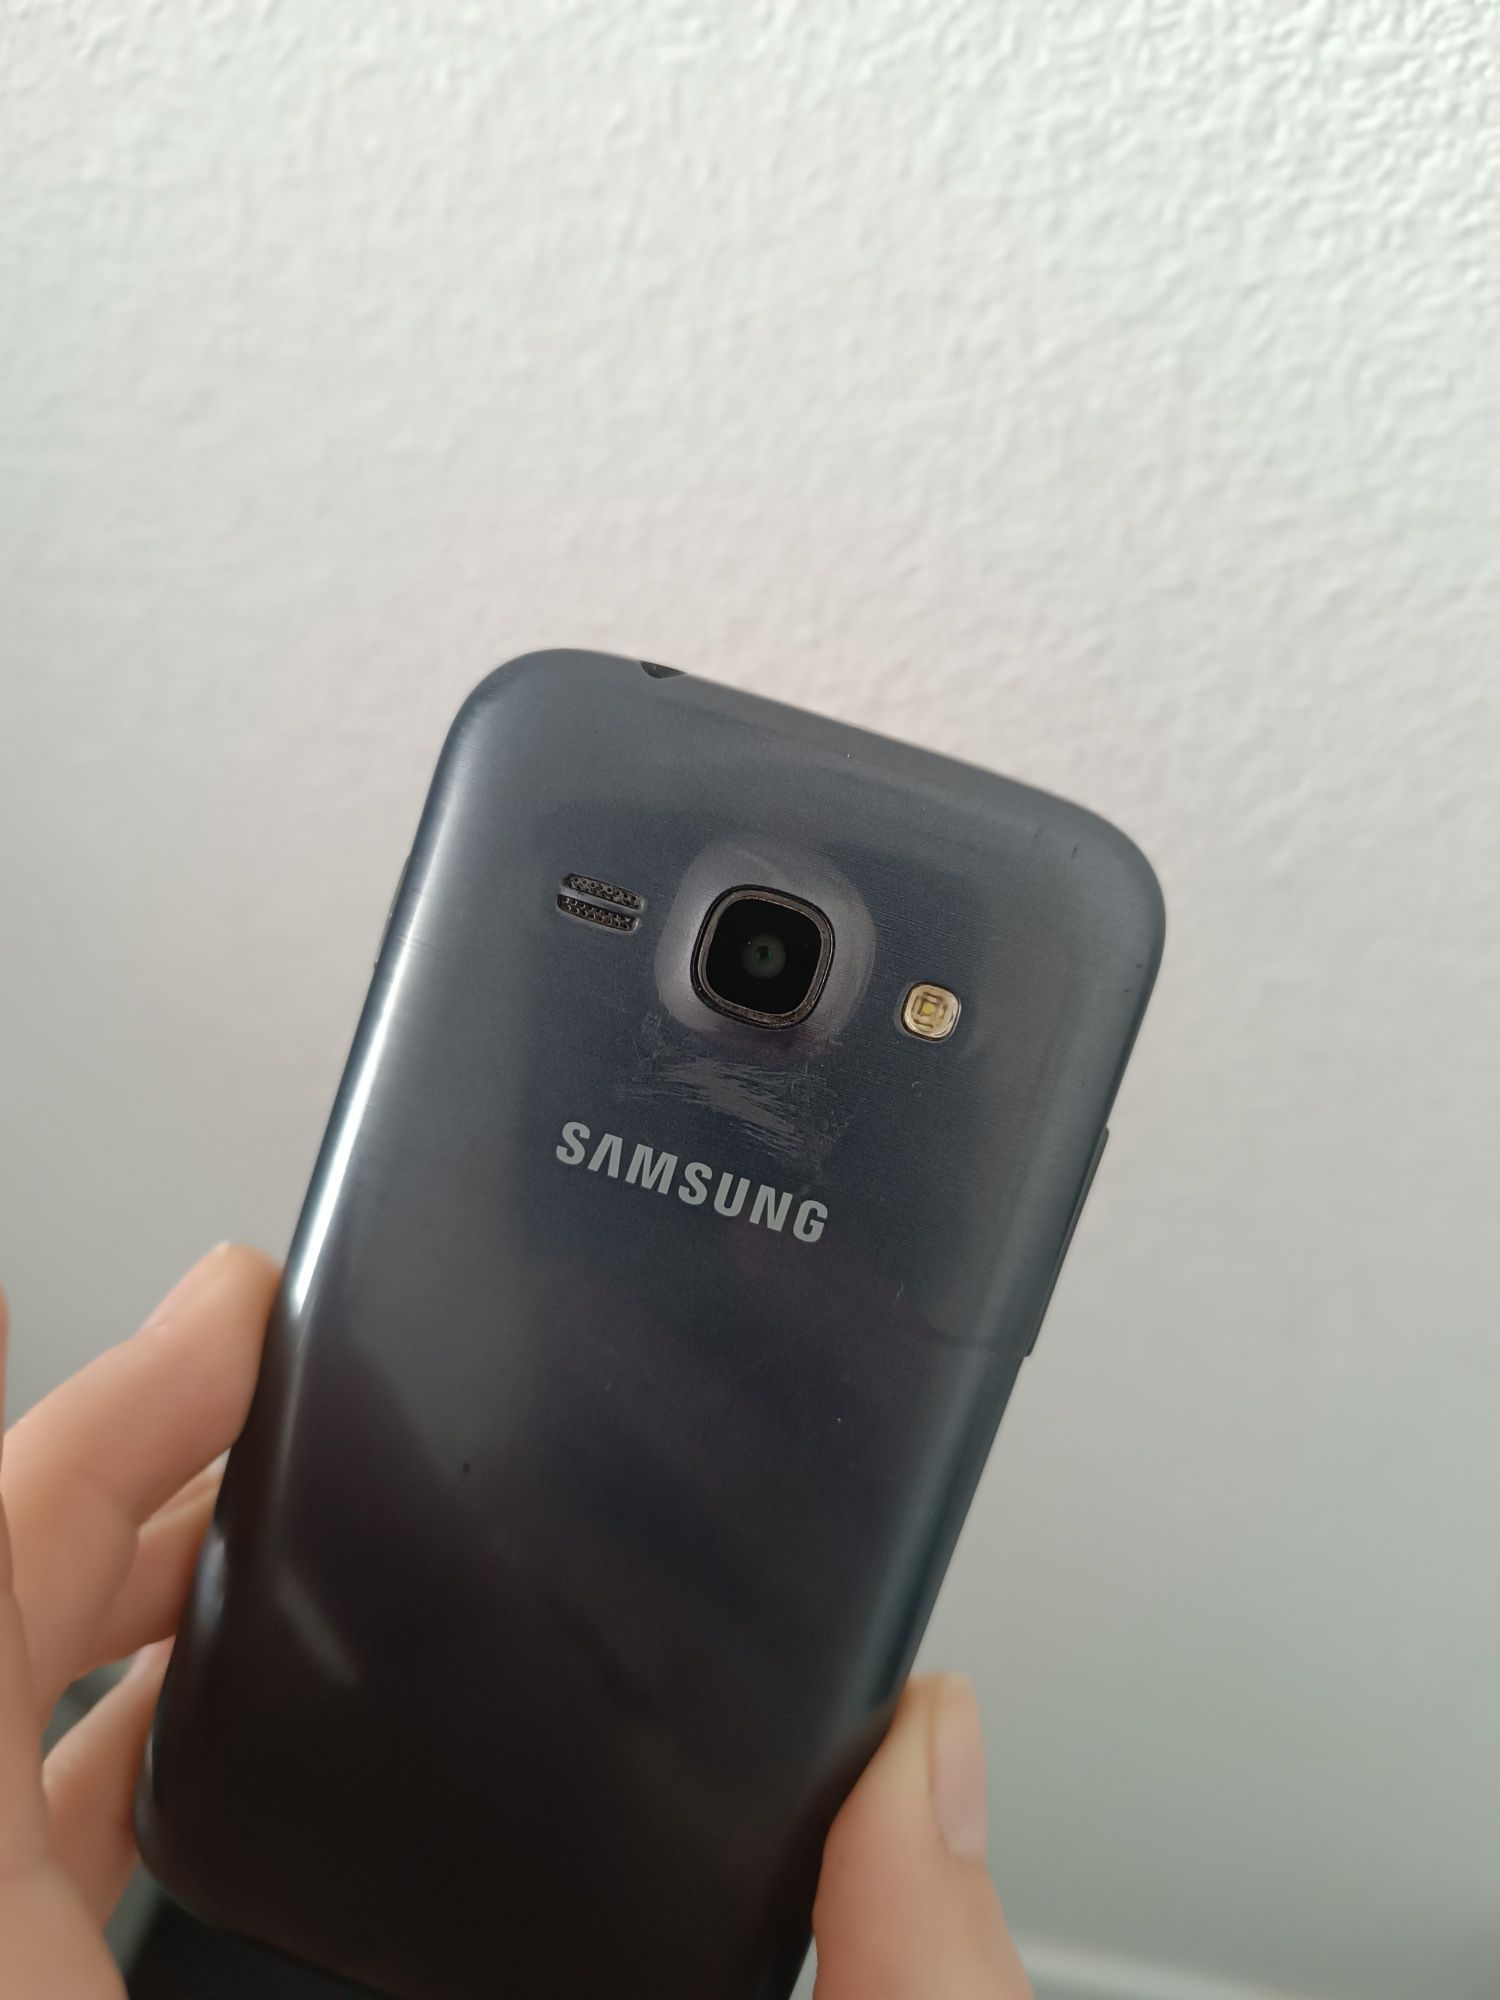 Samsung Galaxy Ace 2 Duos на розбірку